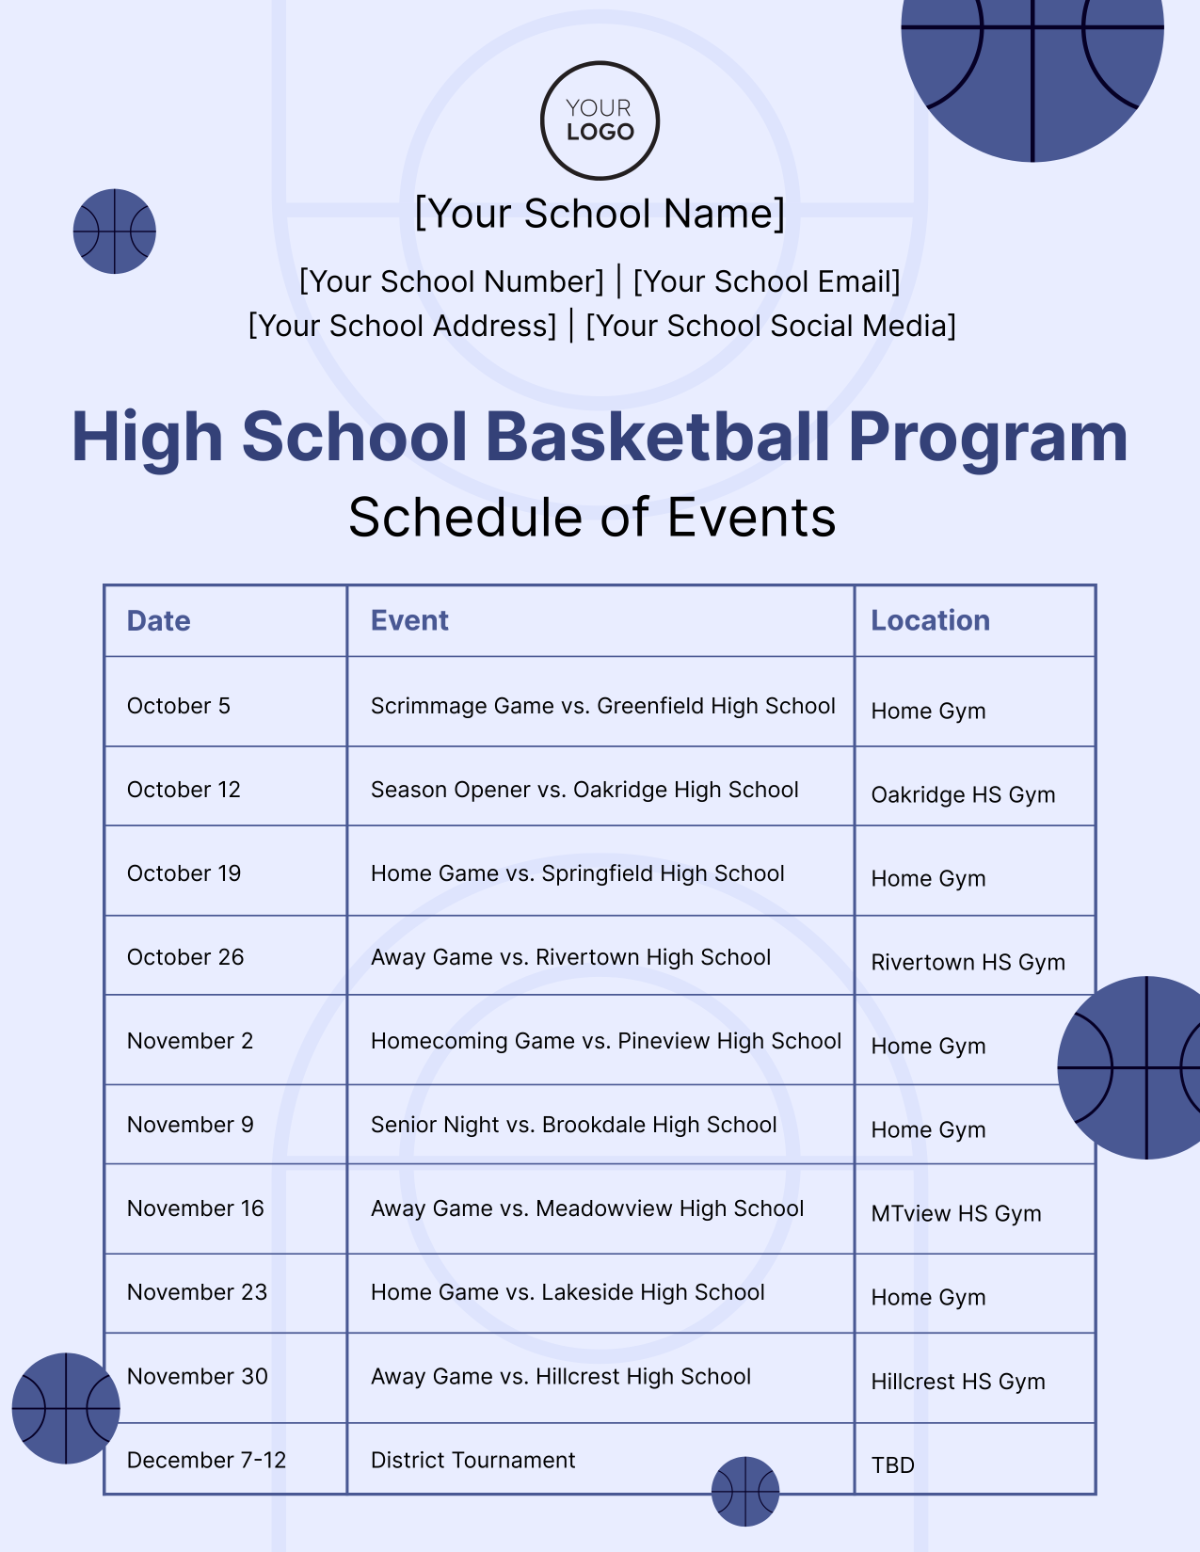 High School Basketball Program